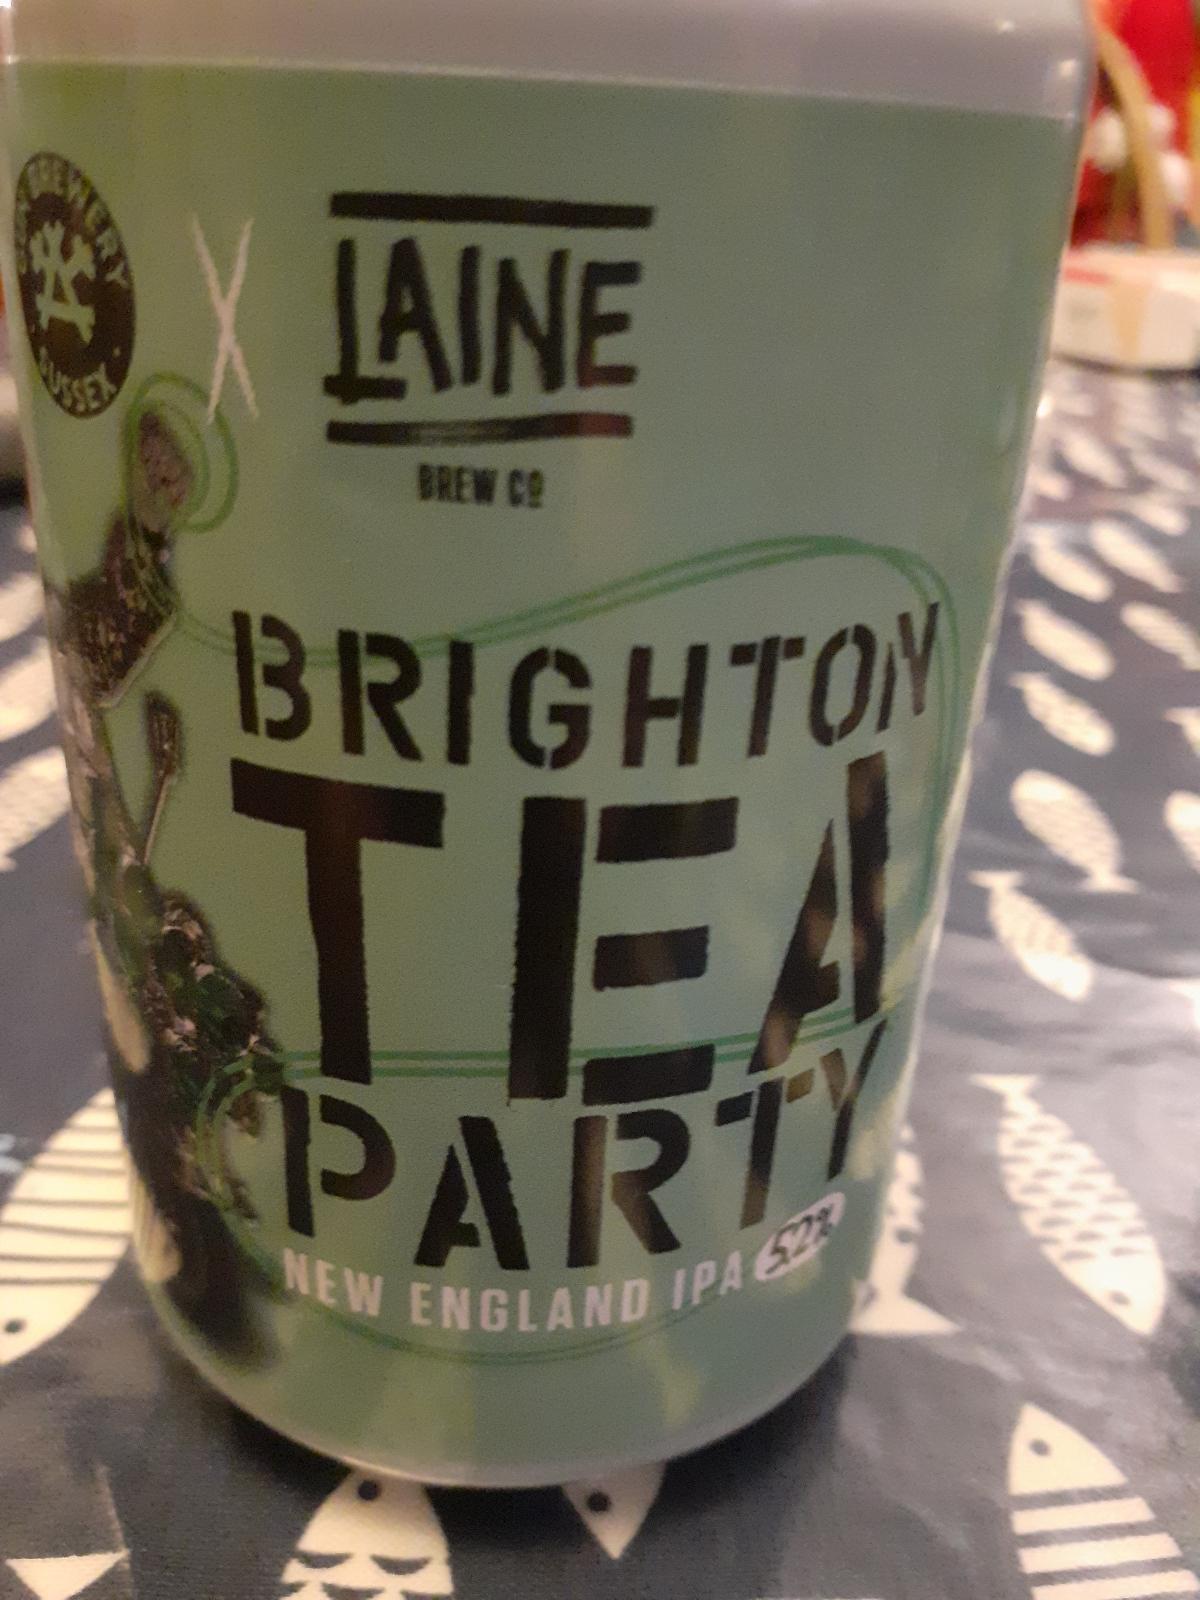 Brighton Tea Party